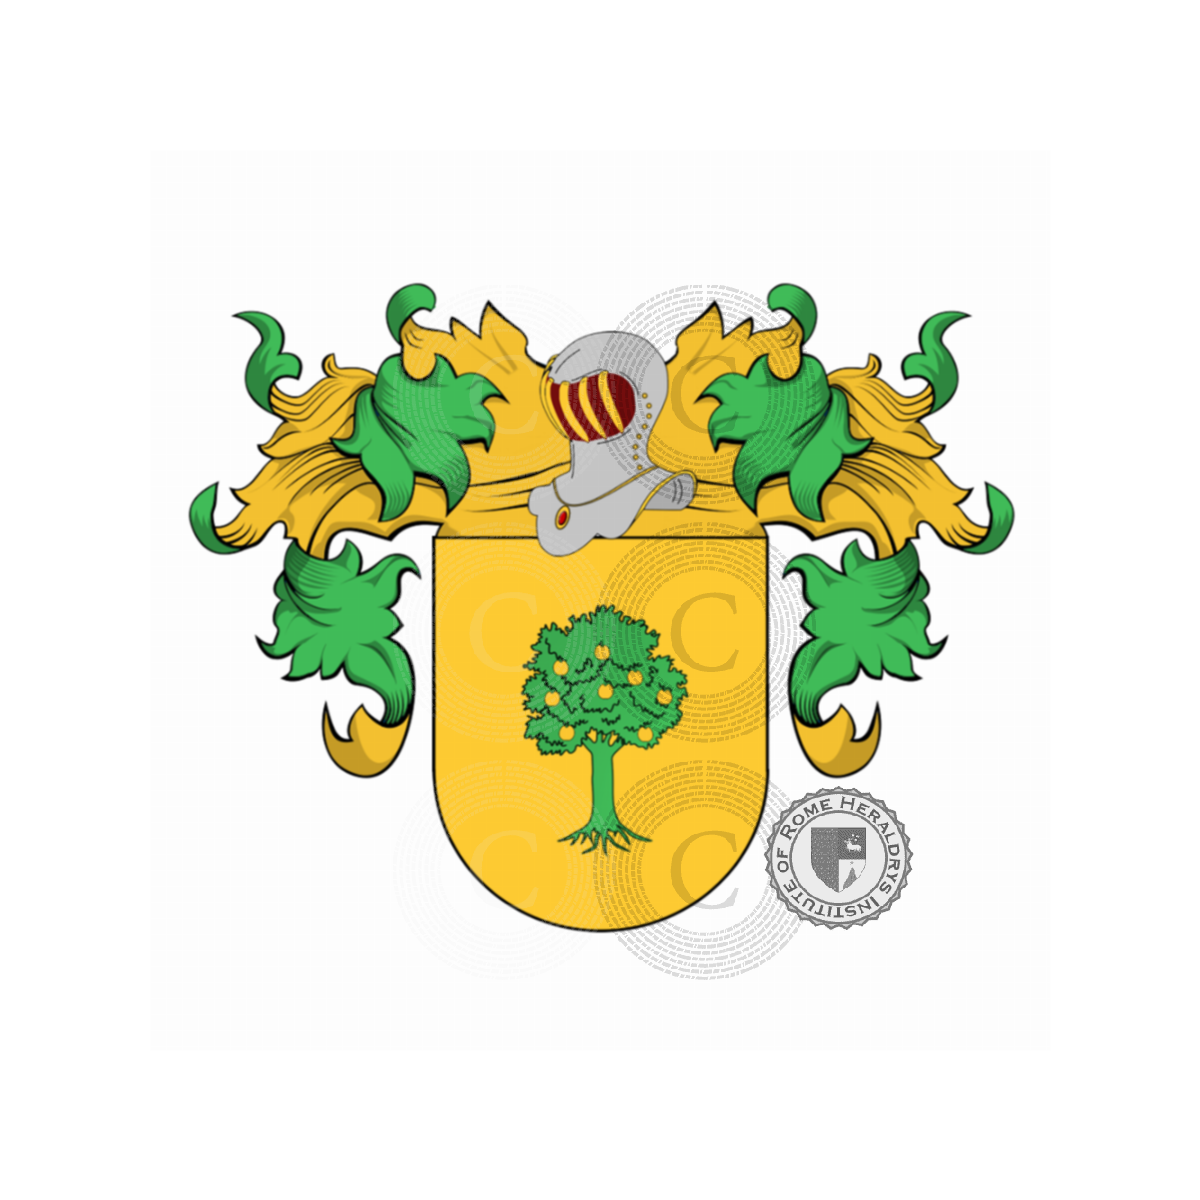 Coat of arms of familyTenorio, Tenório